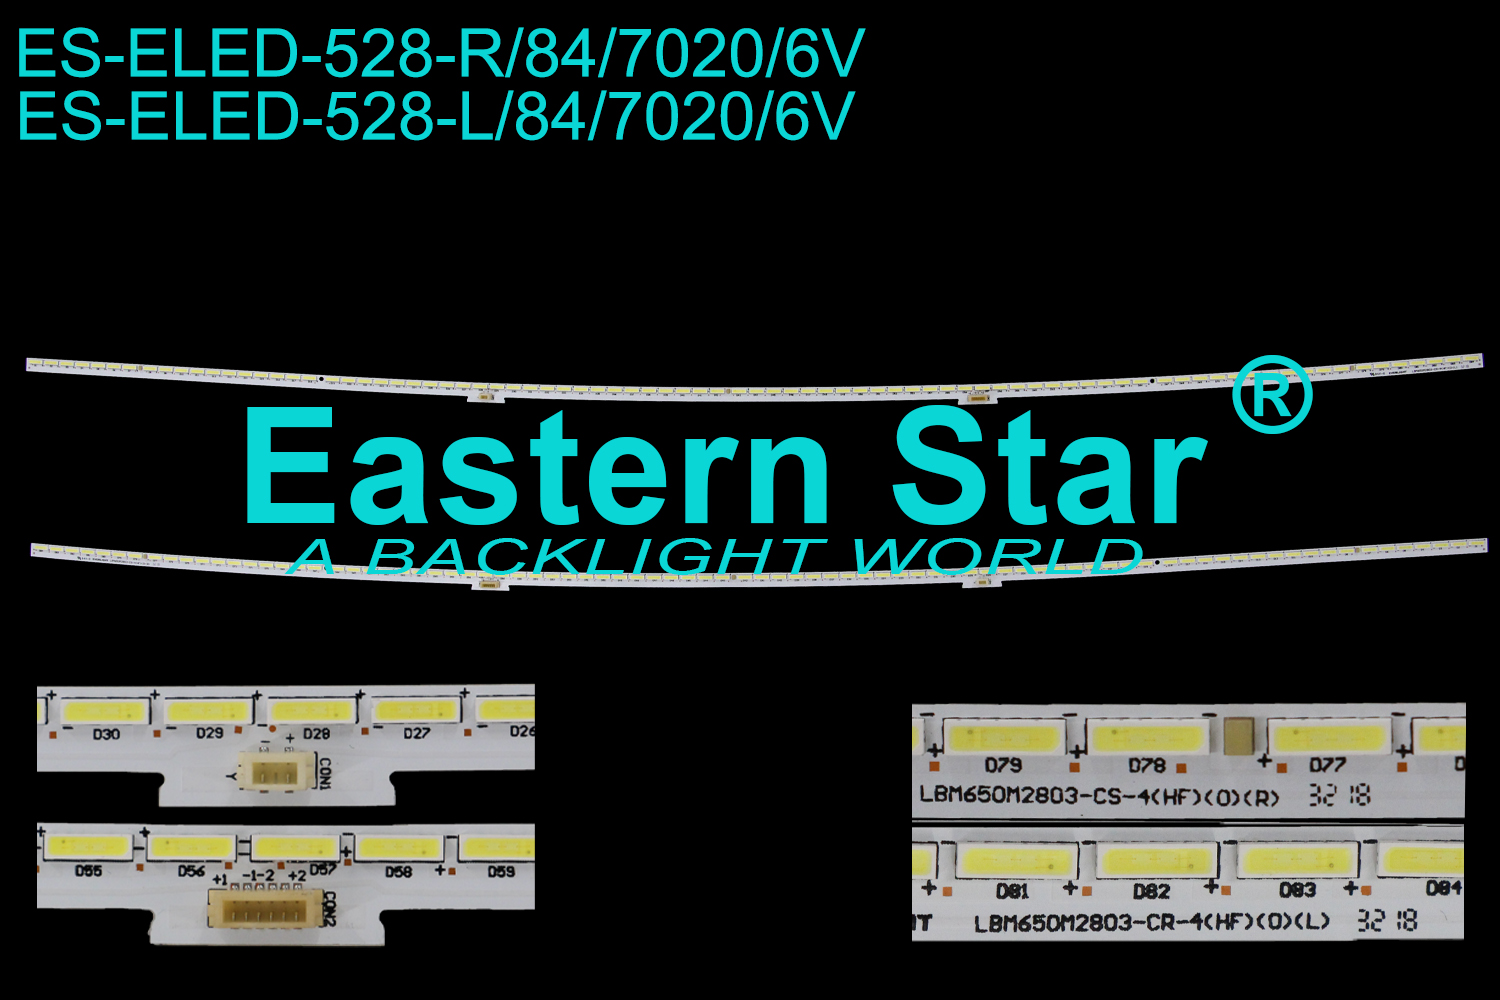 ES-ELED-528 ELED/EDGE TV backlight use for 65'' Hisense LED65EC780UC L:1169635 EVERLIGHT LBM650M2803-CR-4(HF)(0)(L) 3218 R:1169634 EVERLIGHT LBM650M2803-CS-4(HF)(0)(R) 3218 LED STRIPS(2)